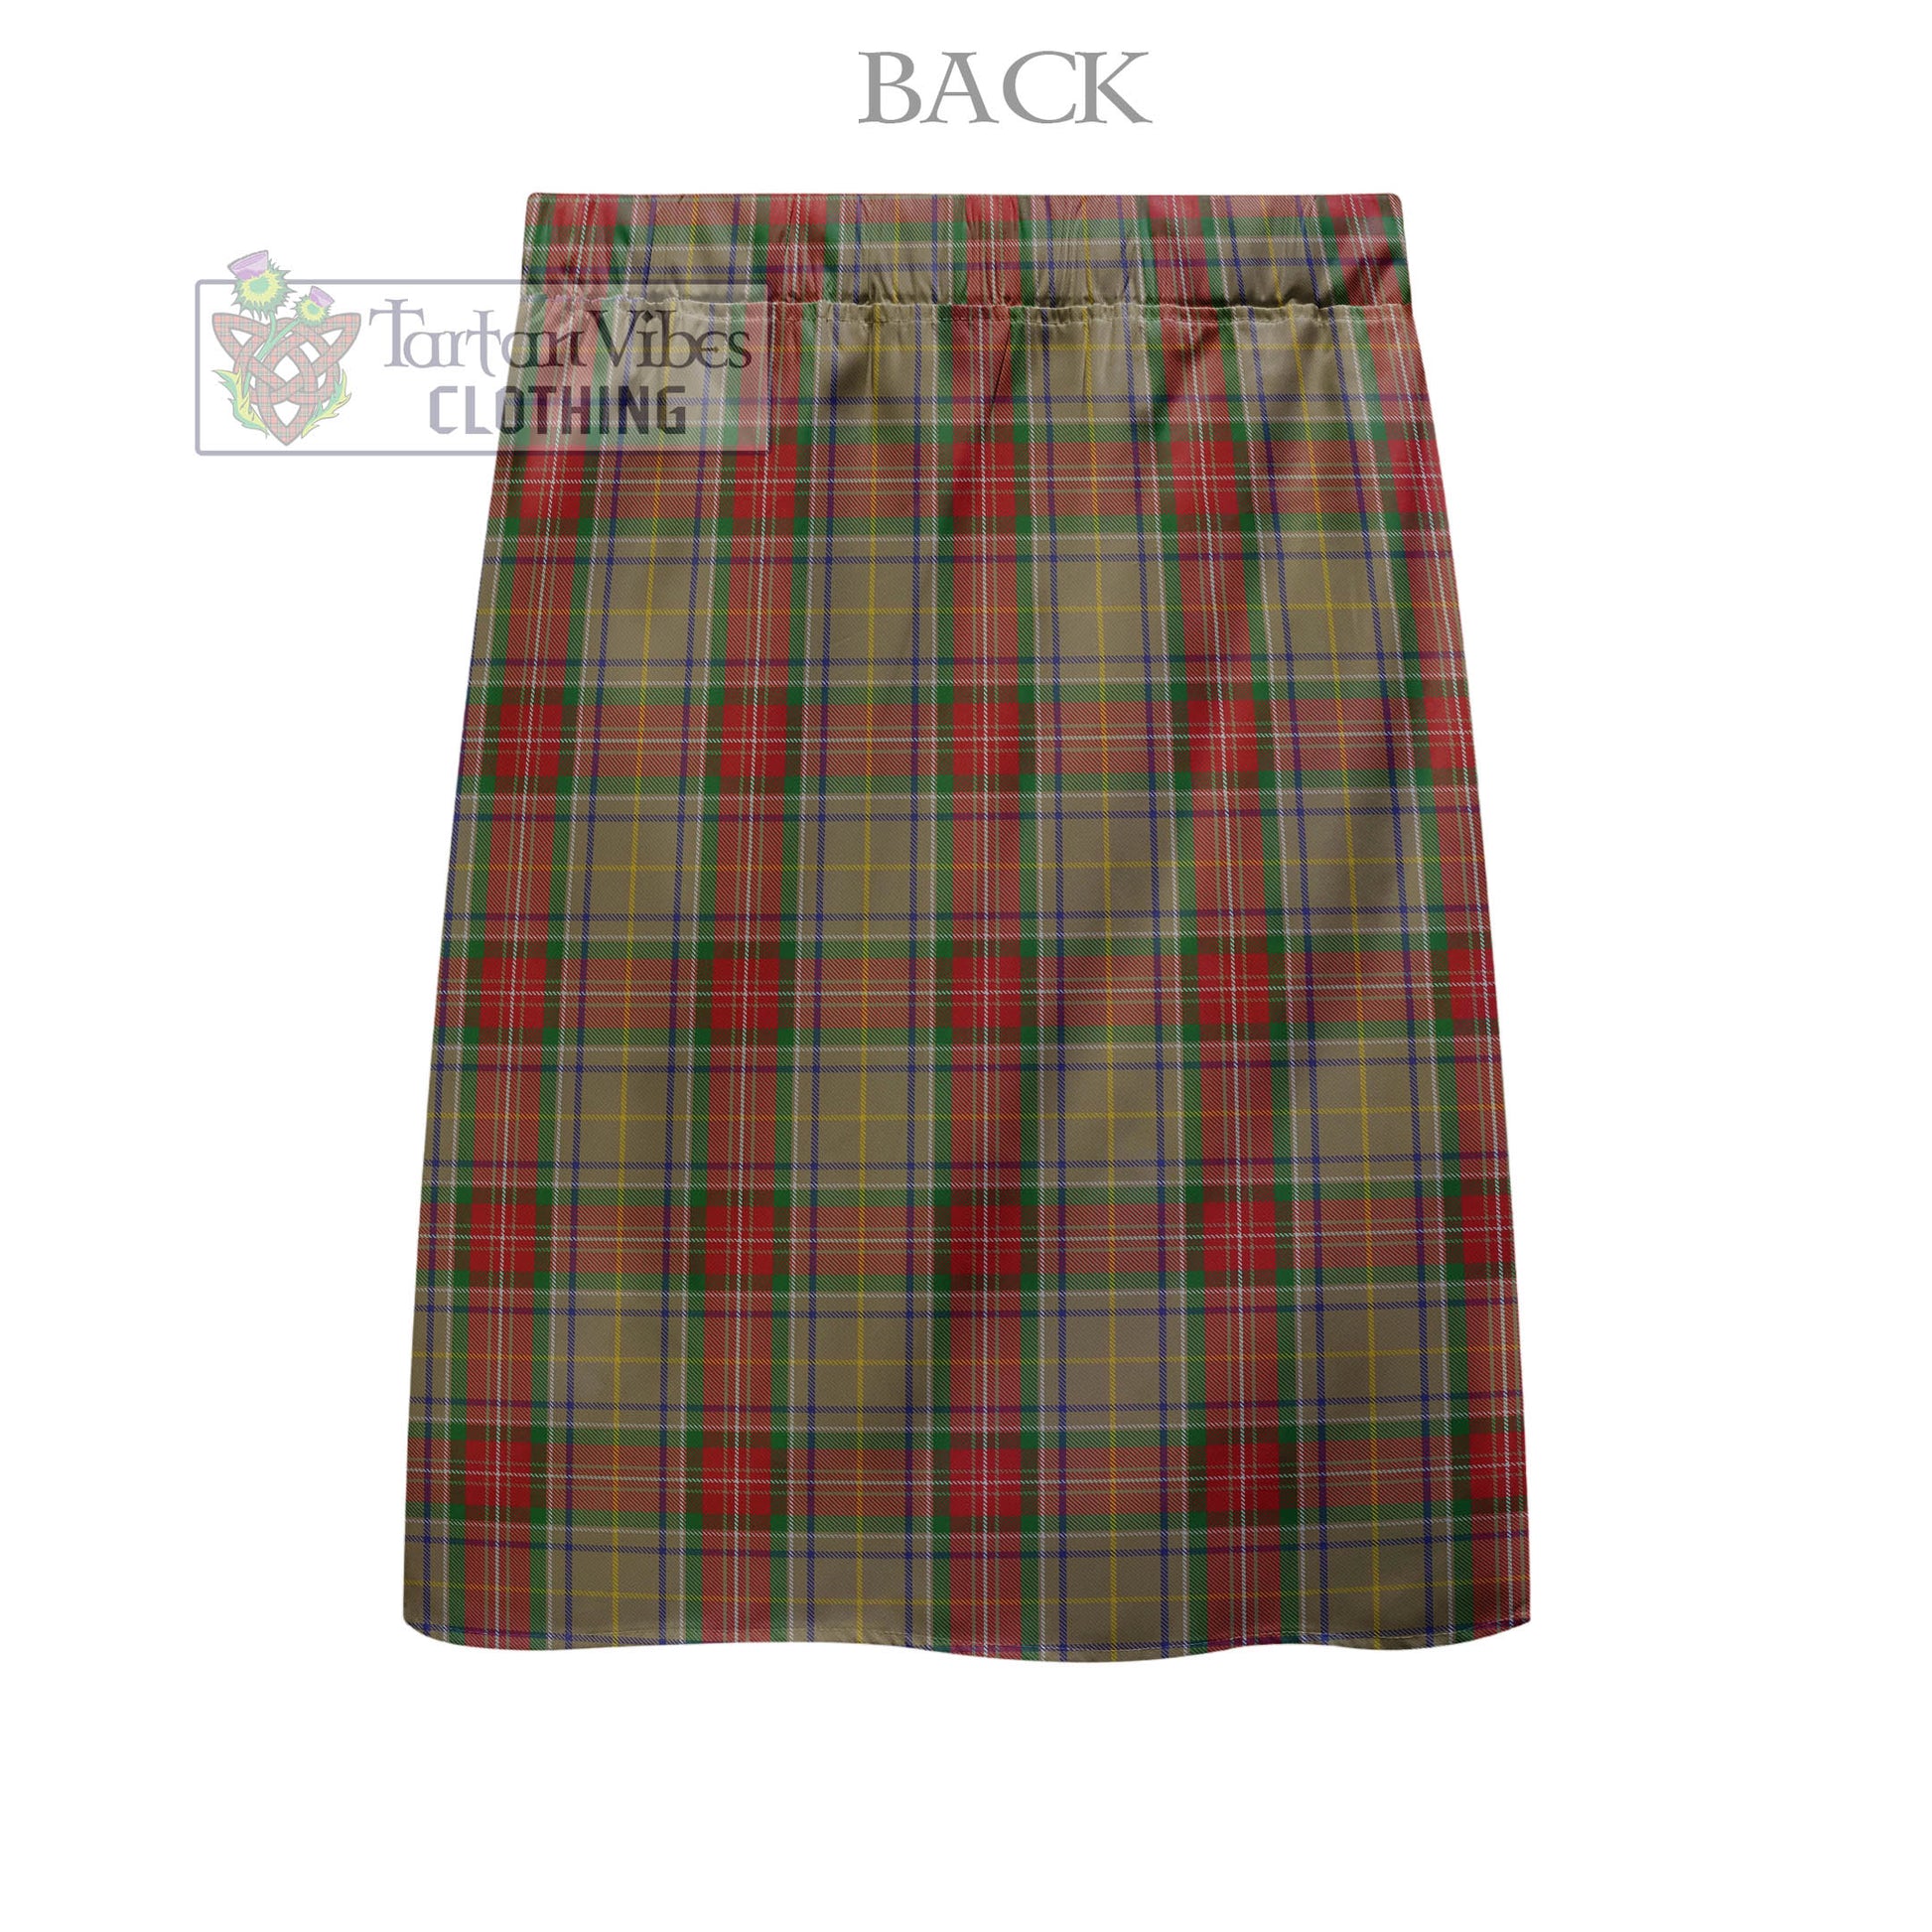 Tartan Vibes Clothing Muirhead Old Tartan Men's Pleated Skirt - Fashion Casual Retro Scottish Style